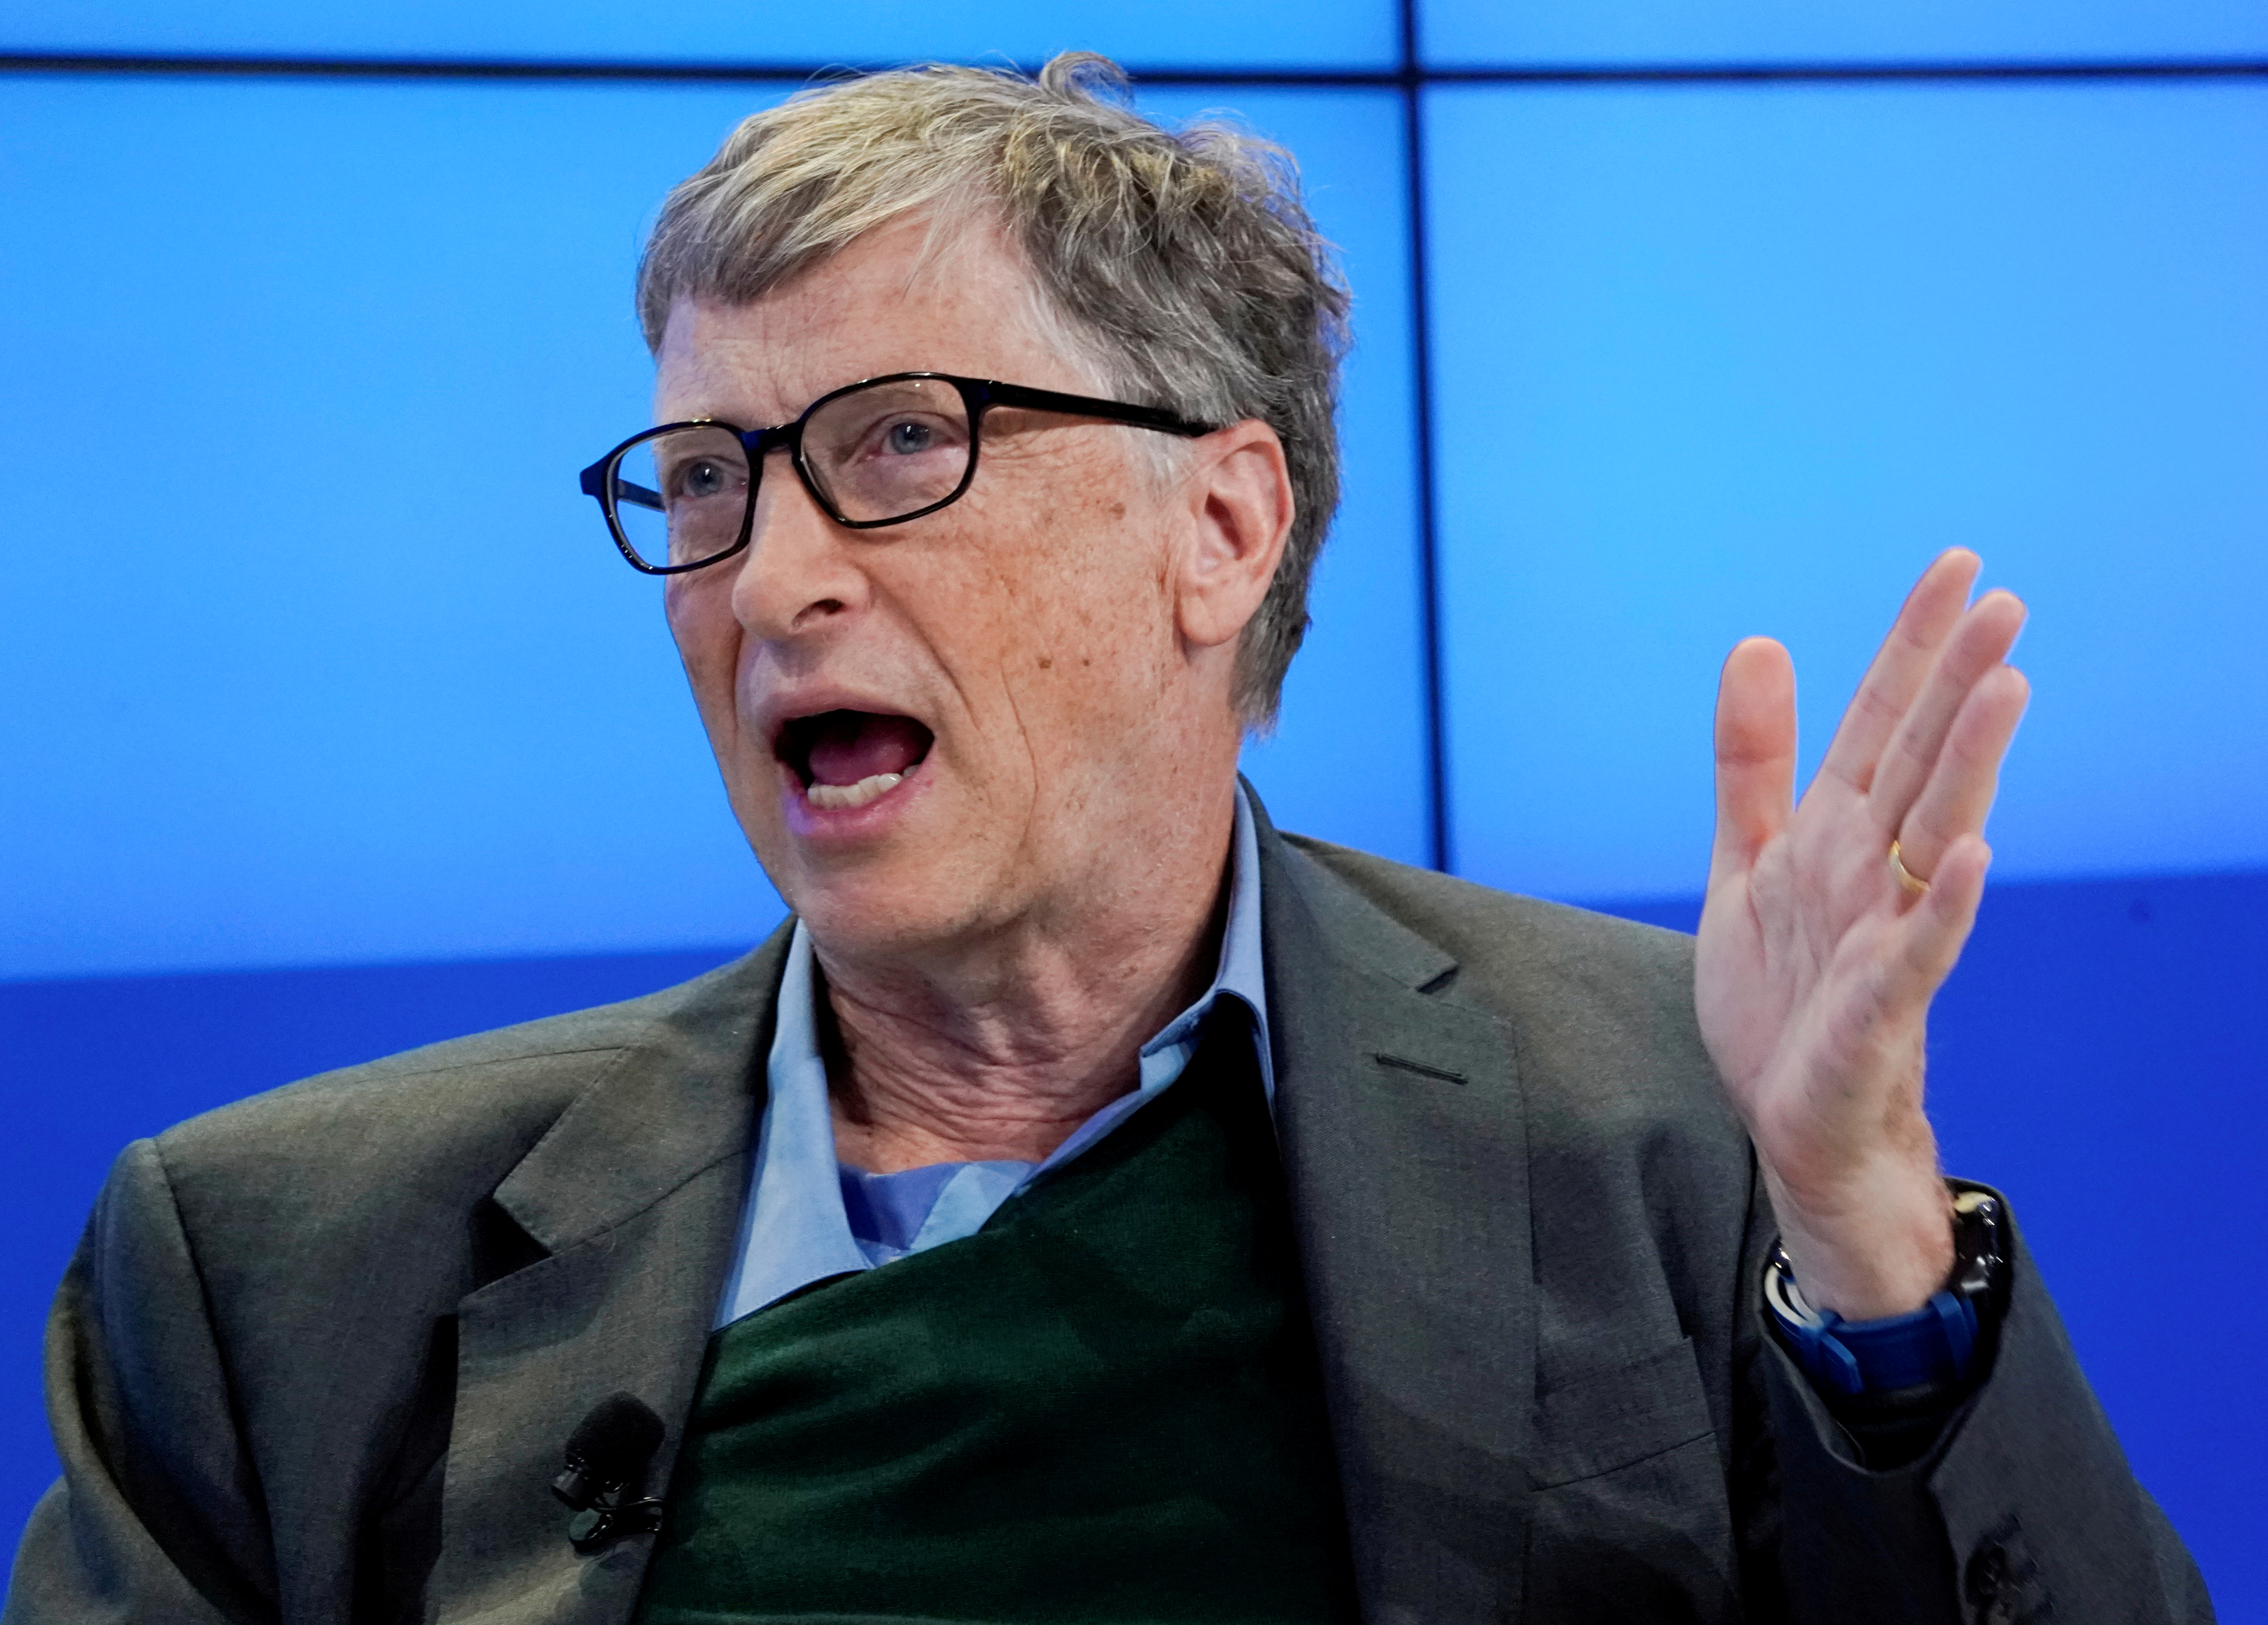 El sistema favorito de Bill Gates para un celular es Android. REUTERS/Denis Balibouse/File Photo